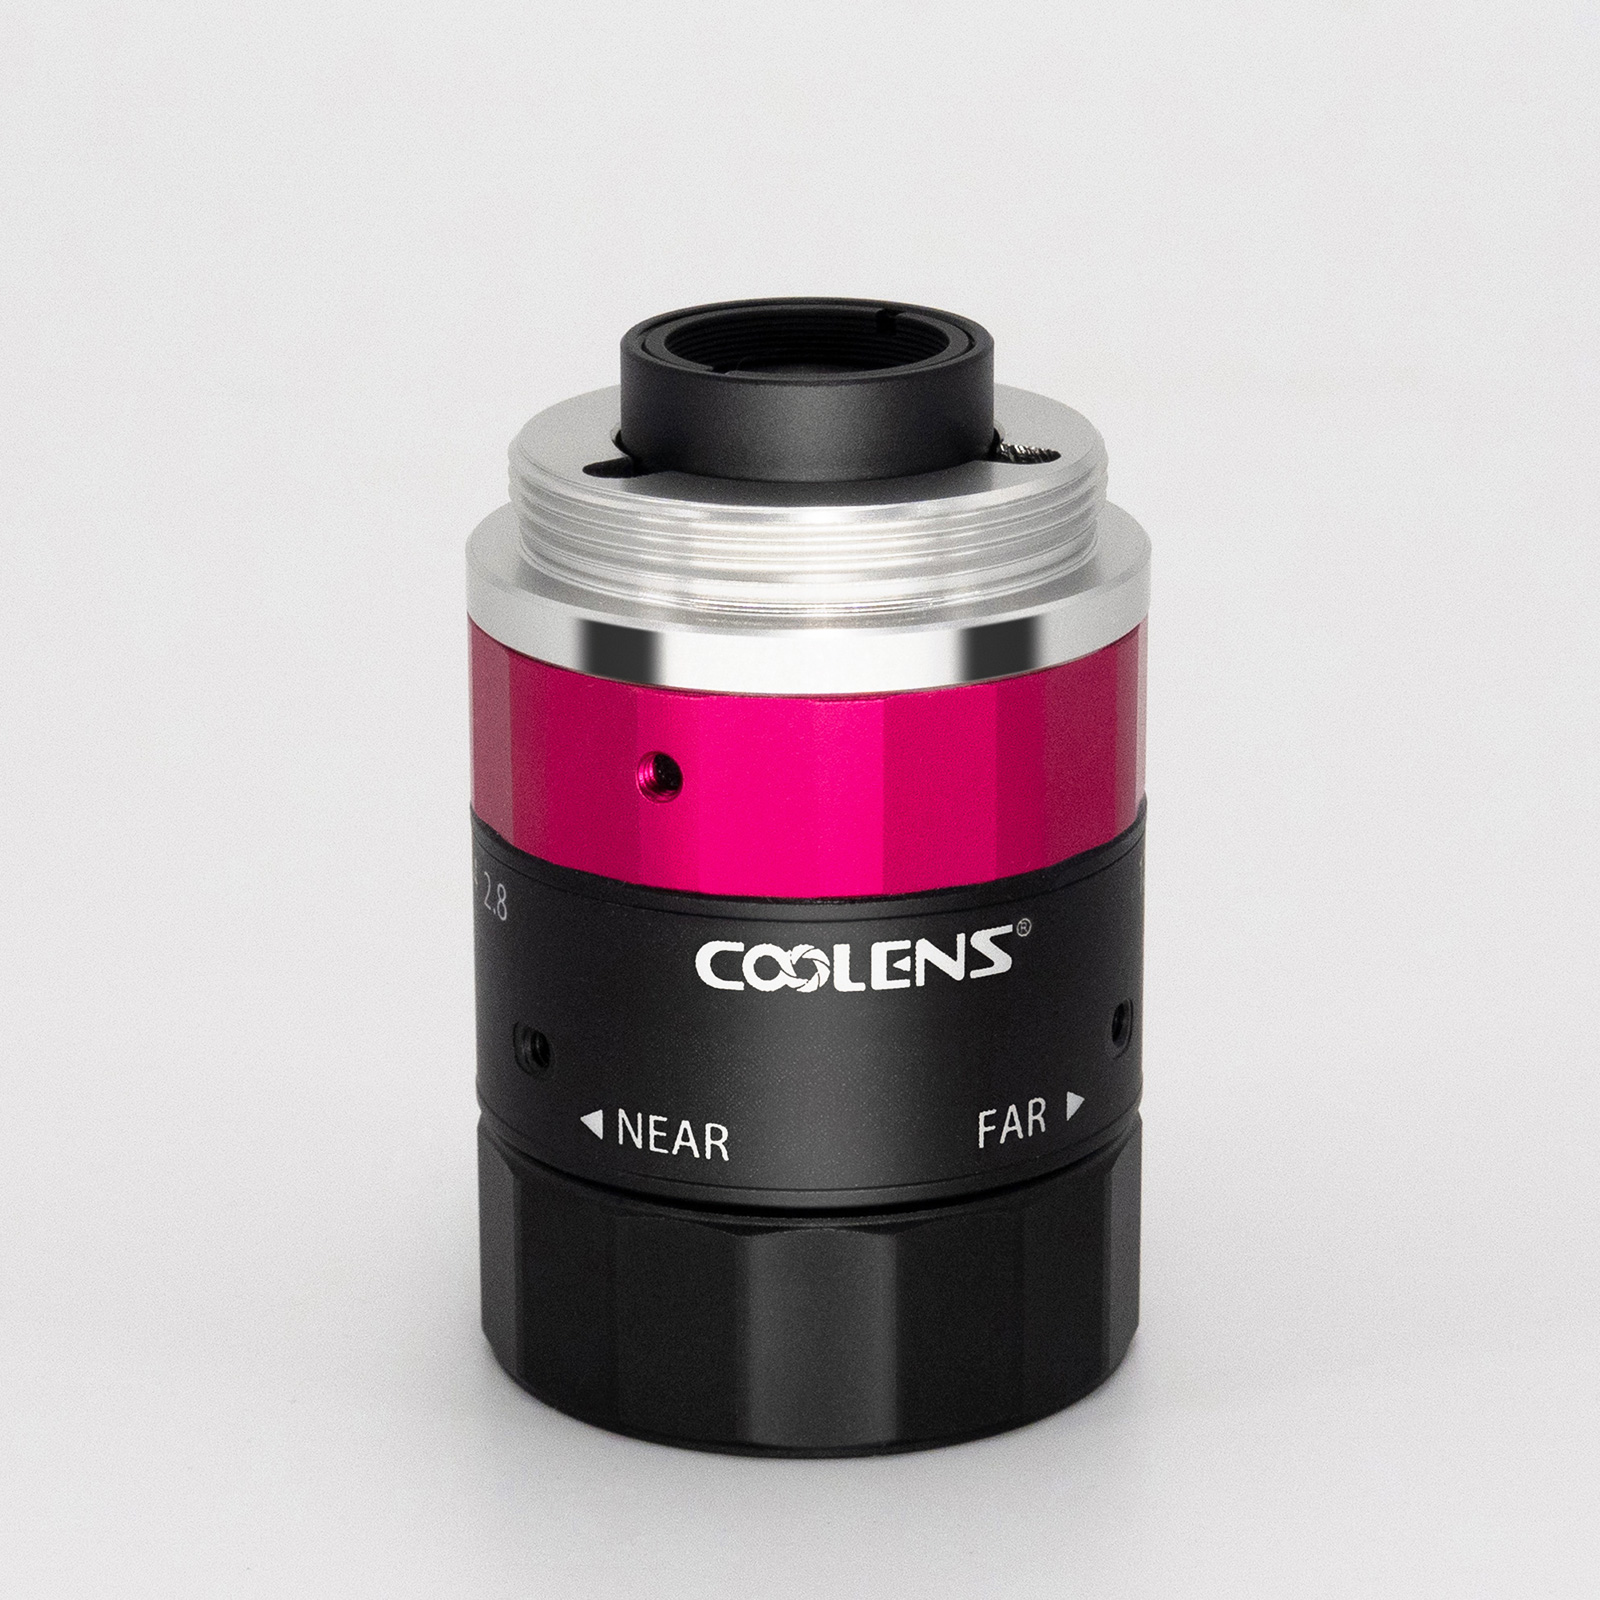 1/1.8" 12mm Fixed Focal Length Lens | MFA118-S12V2 COOLENS®-OKLAB